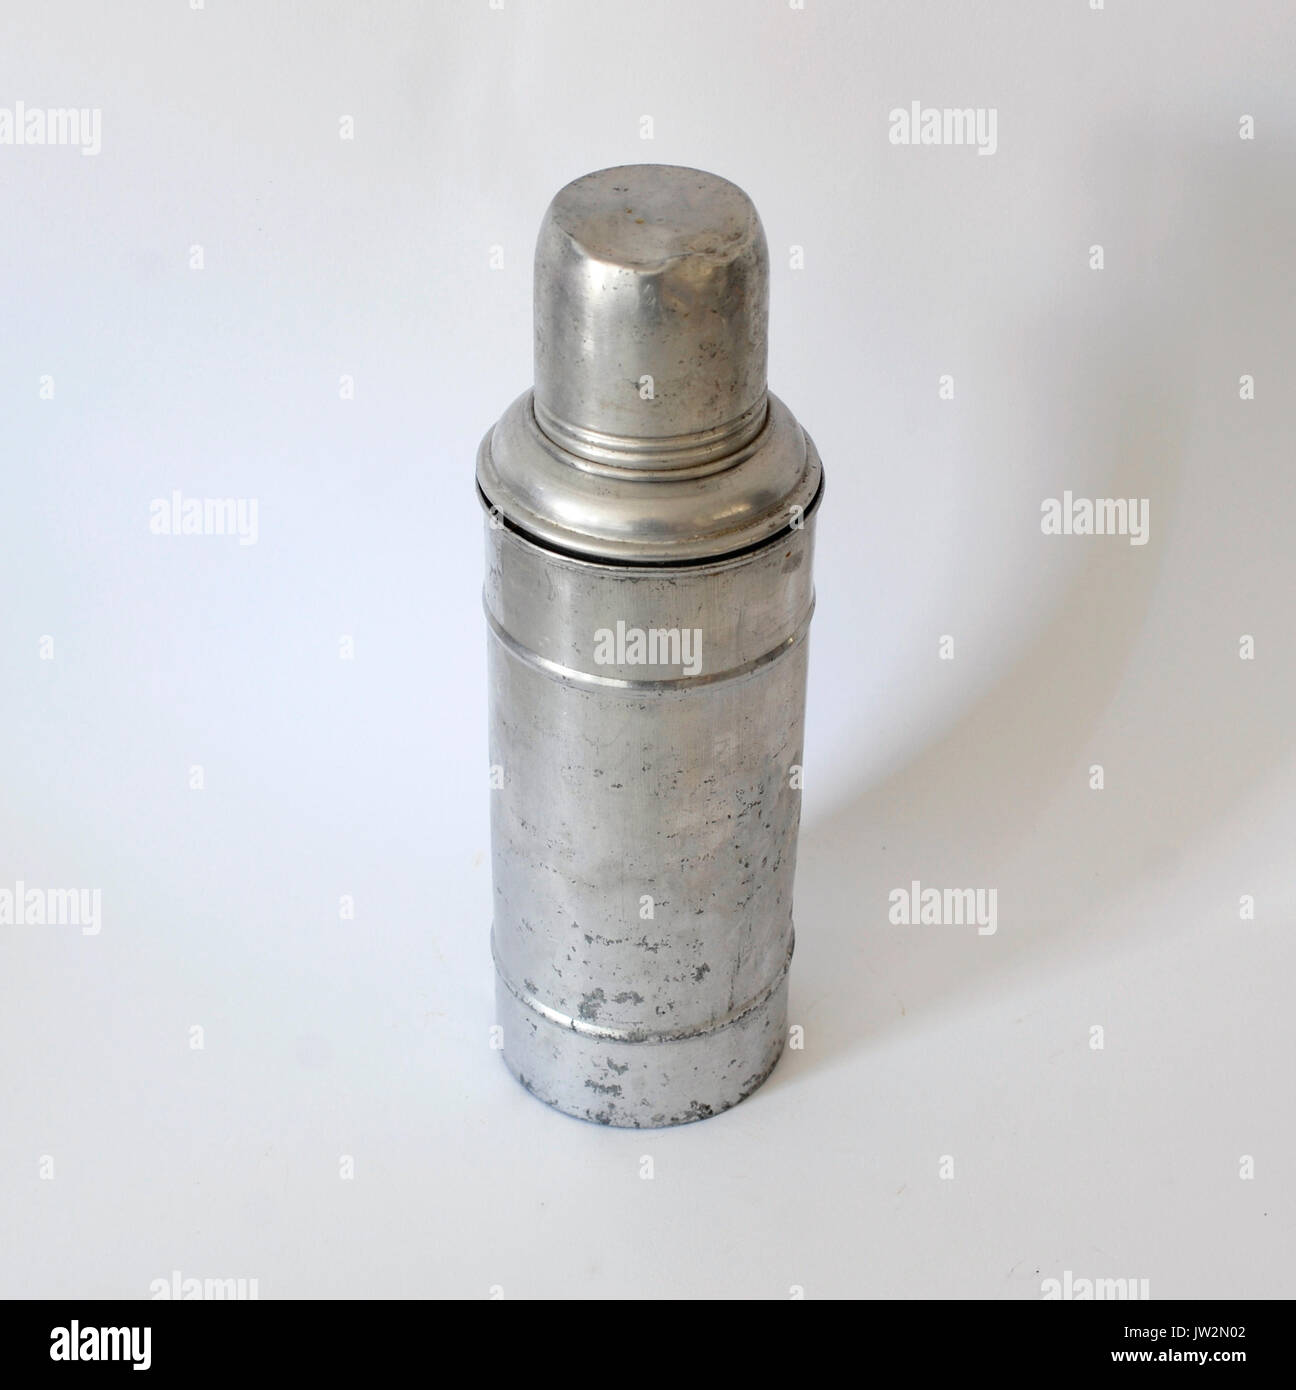 https://c8.alamy.com/comp/JW2N02/ancientaluminum-thermos-flask-vacuum-brand-irum-made-in-spain-JW2N02.jpg